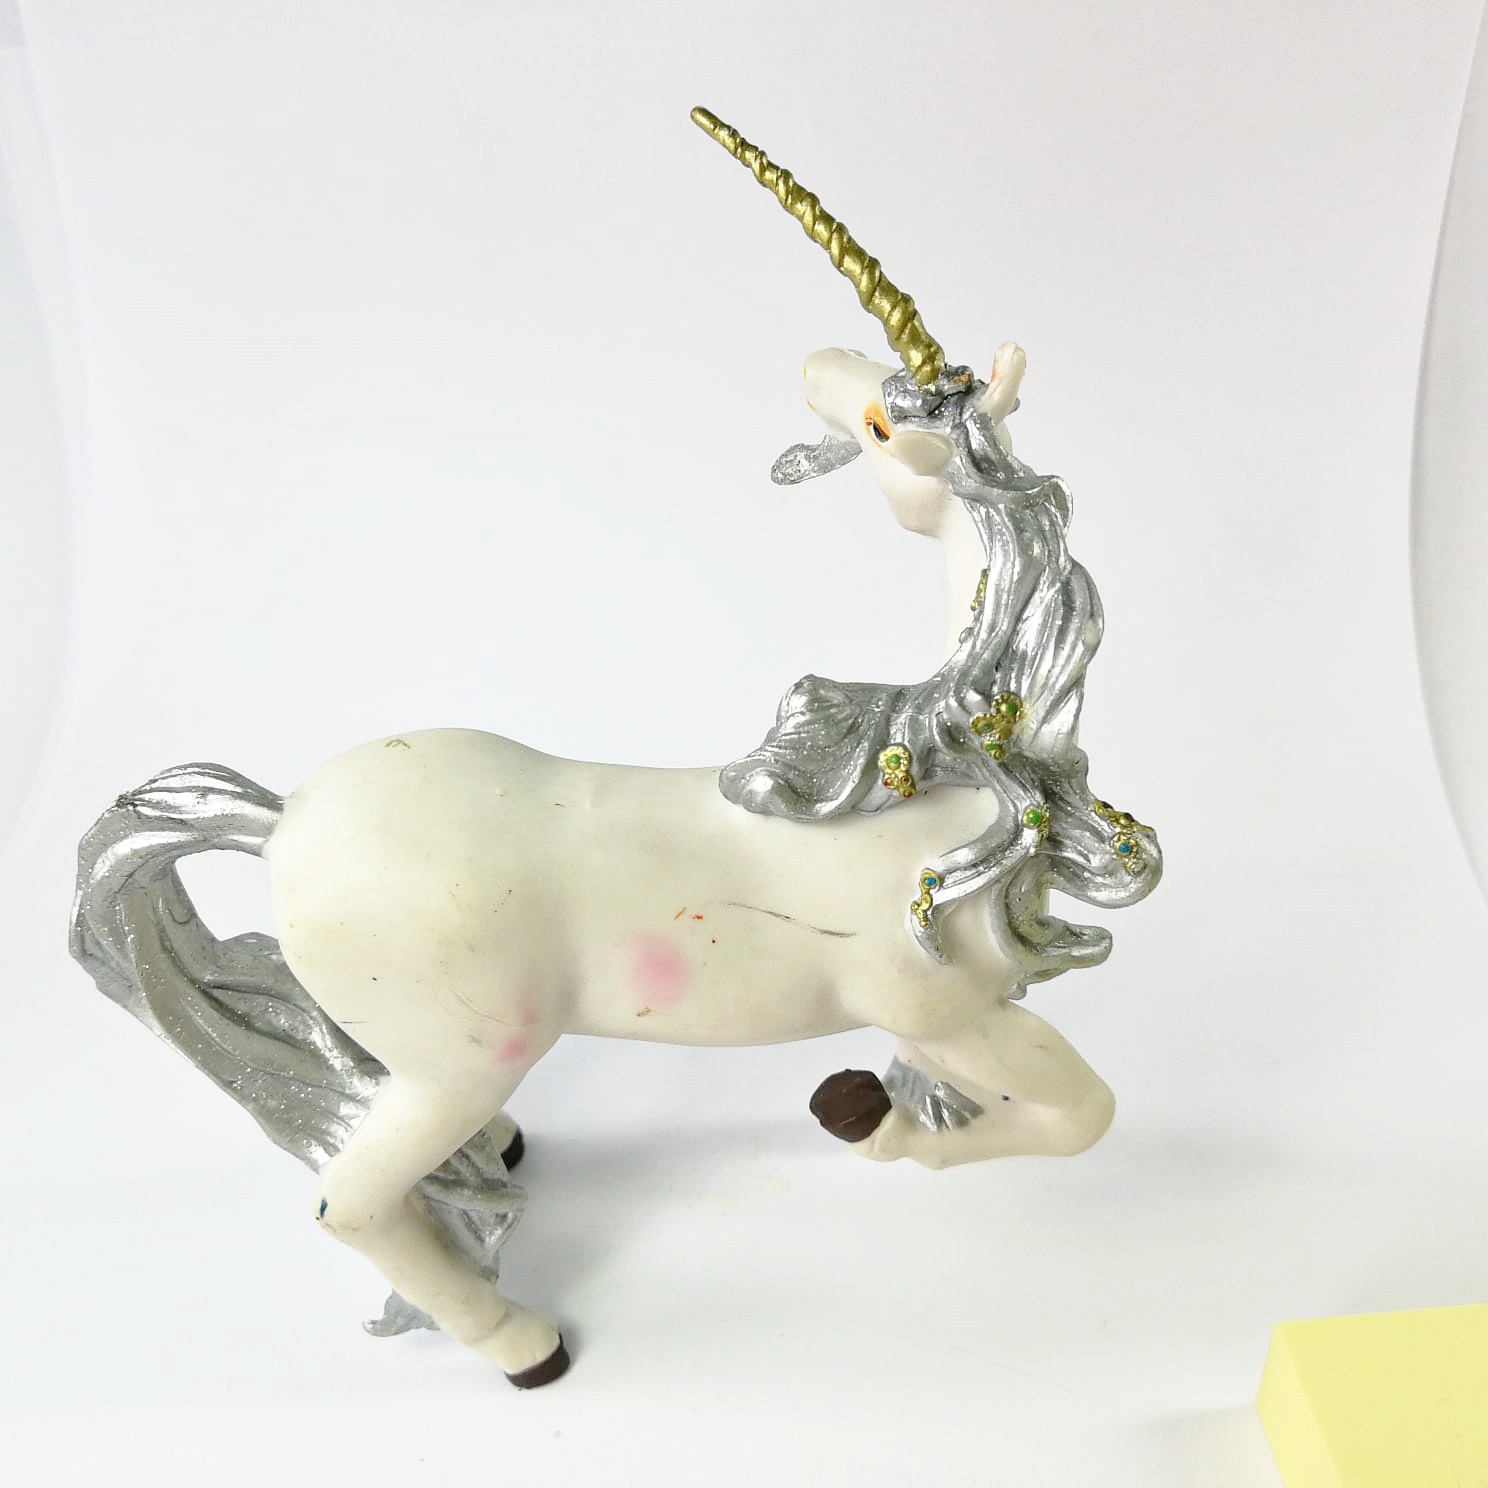 Unicorn Boynuzlu At - Noddy Papo 2002 / Oyuncak figür